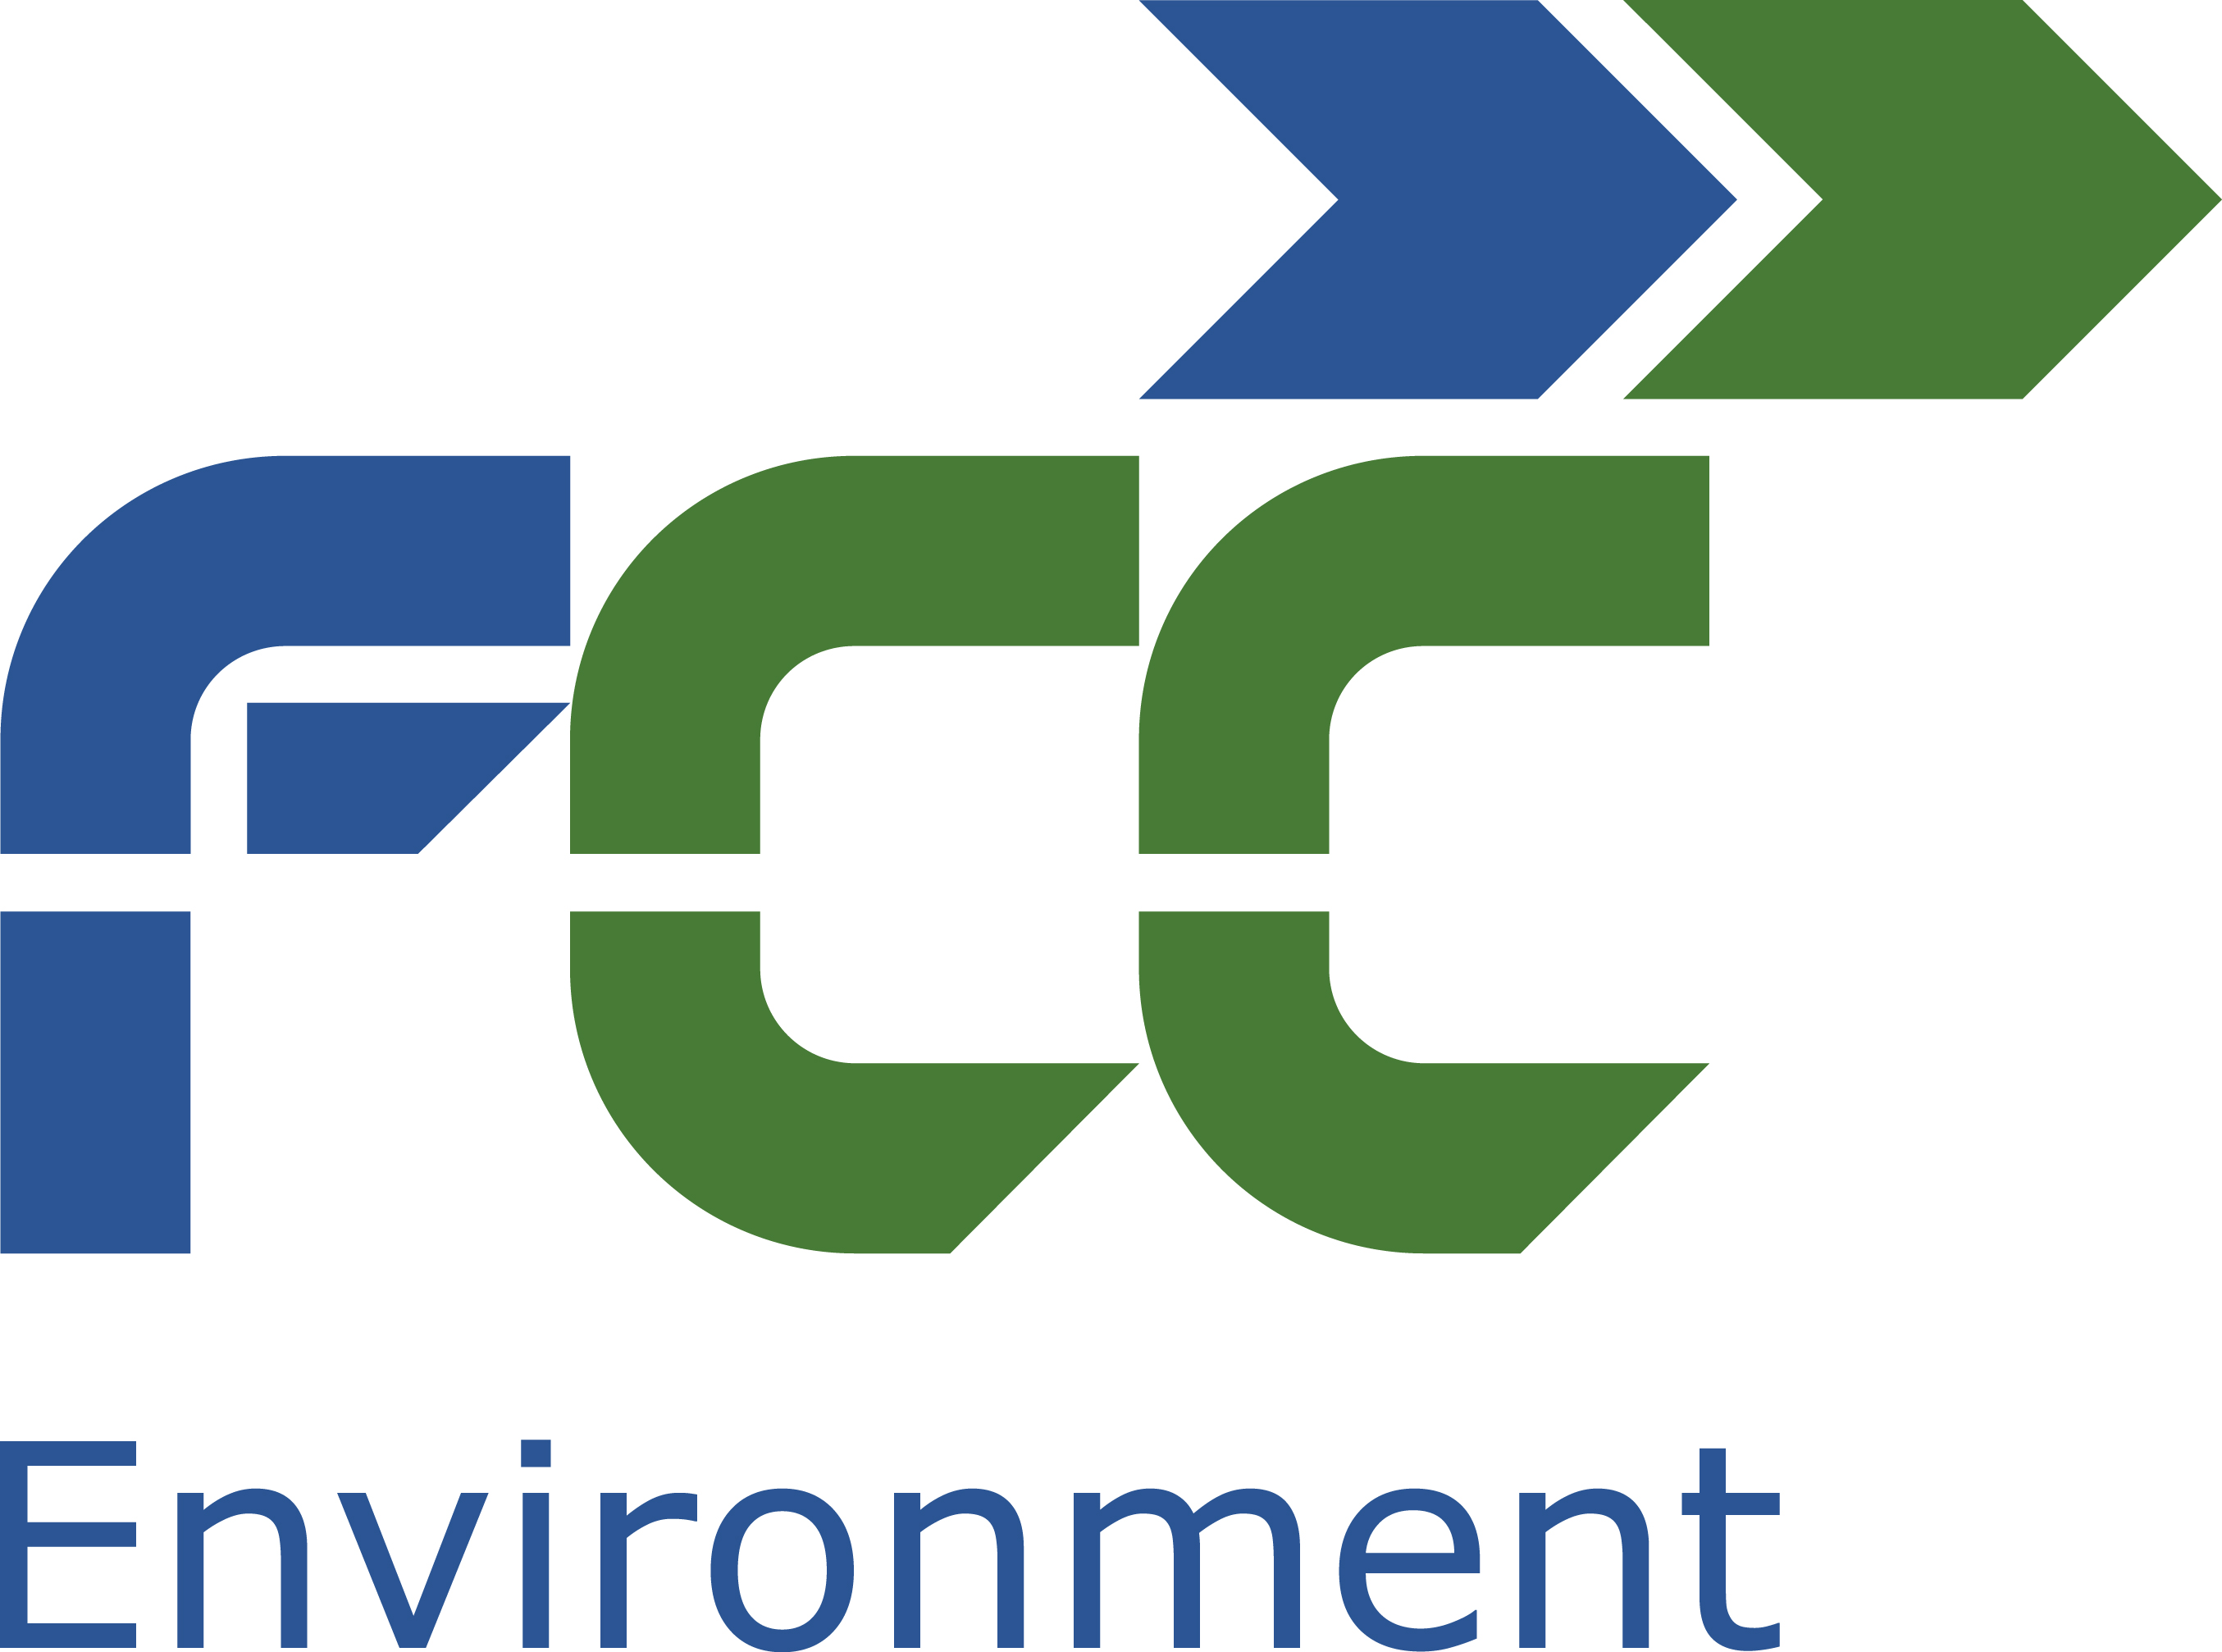 FCC Environment Portugal